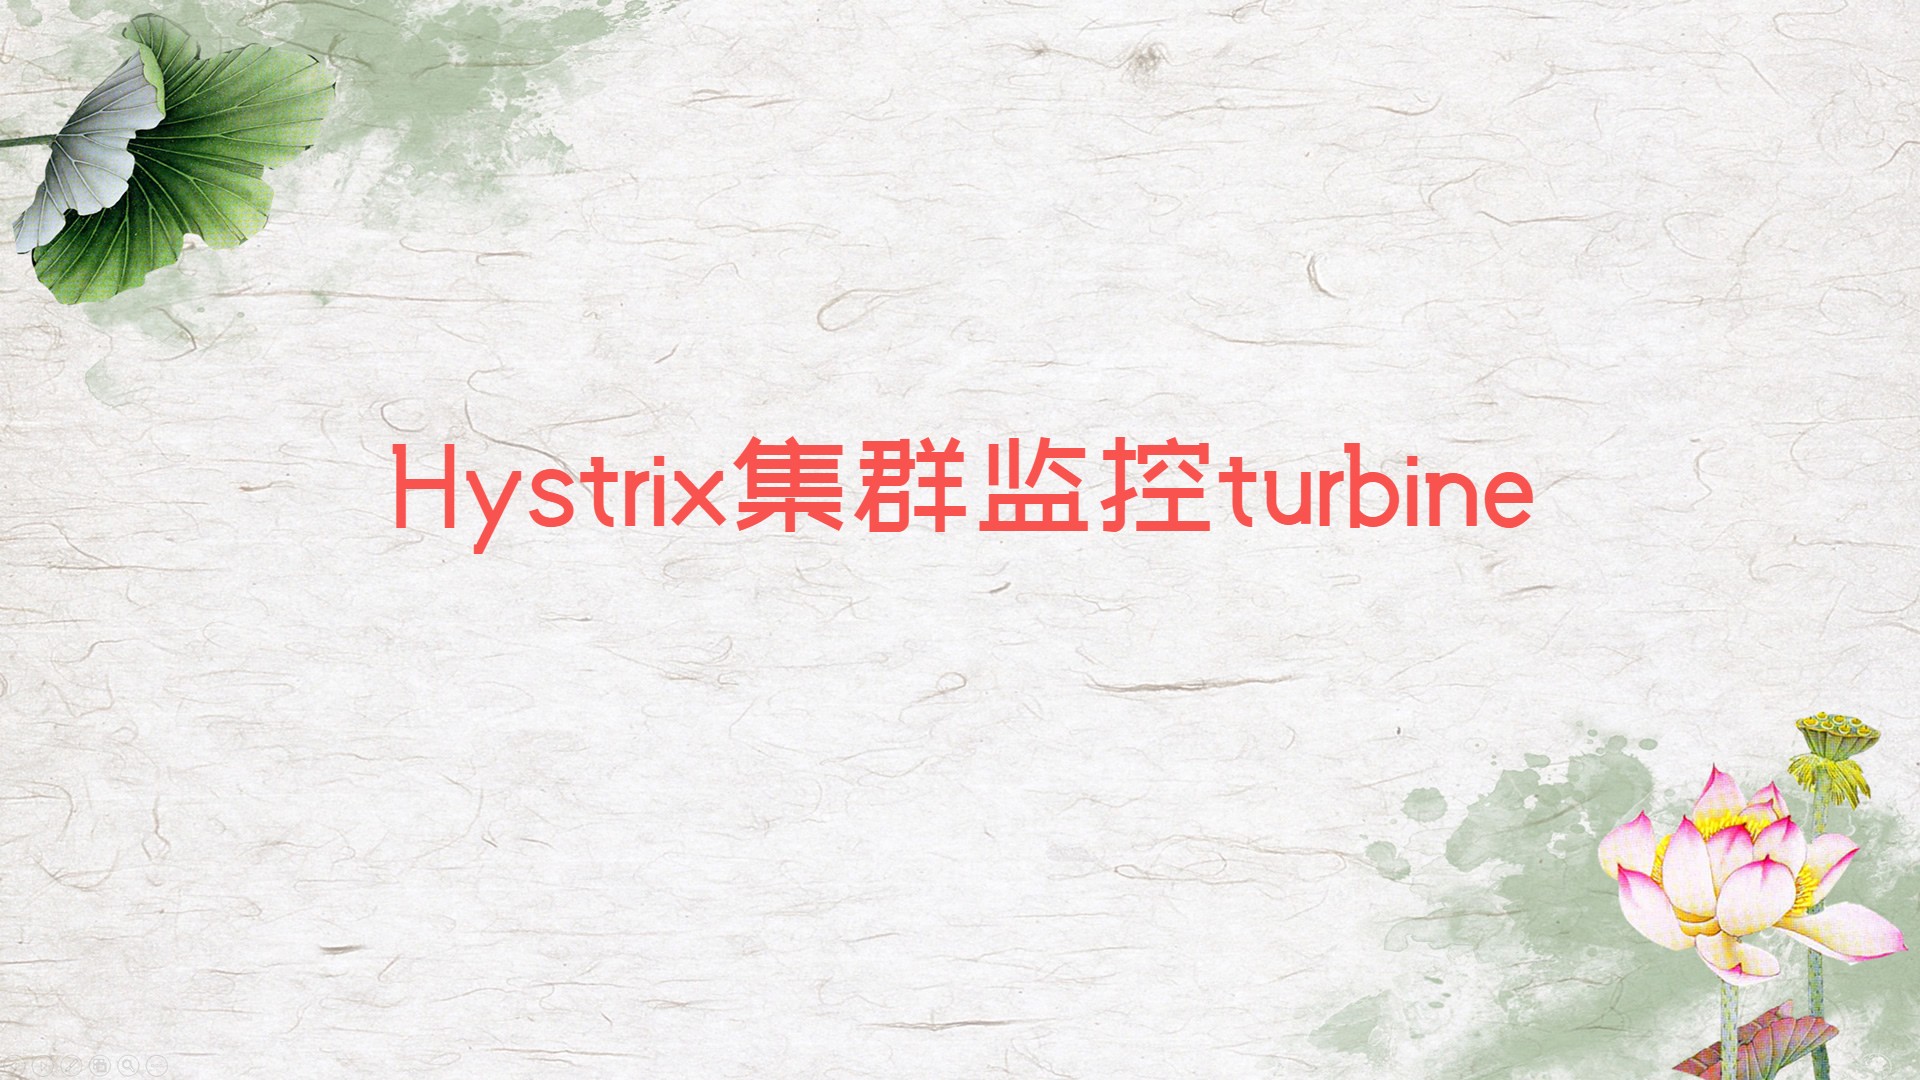 Hystrix集群监控turbine